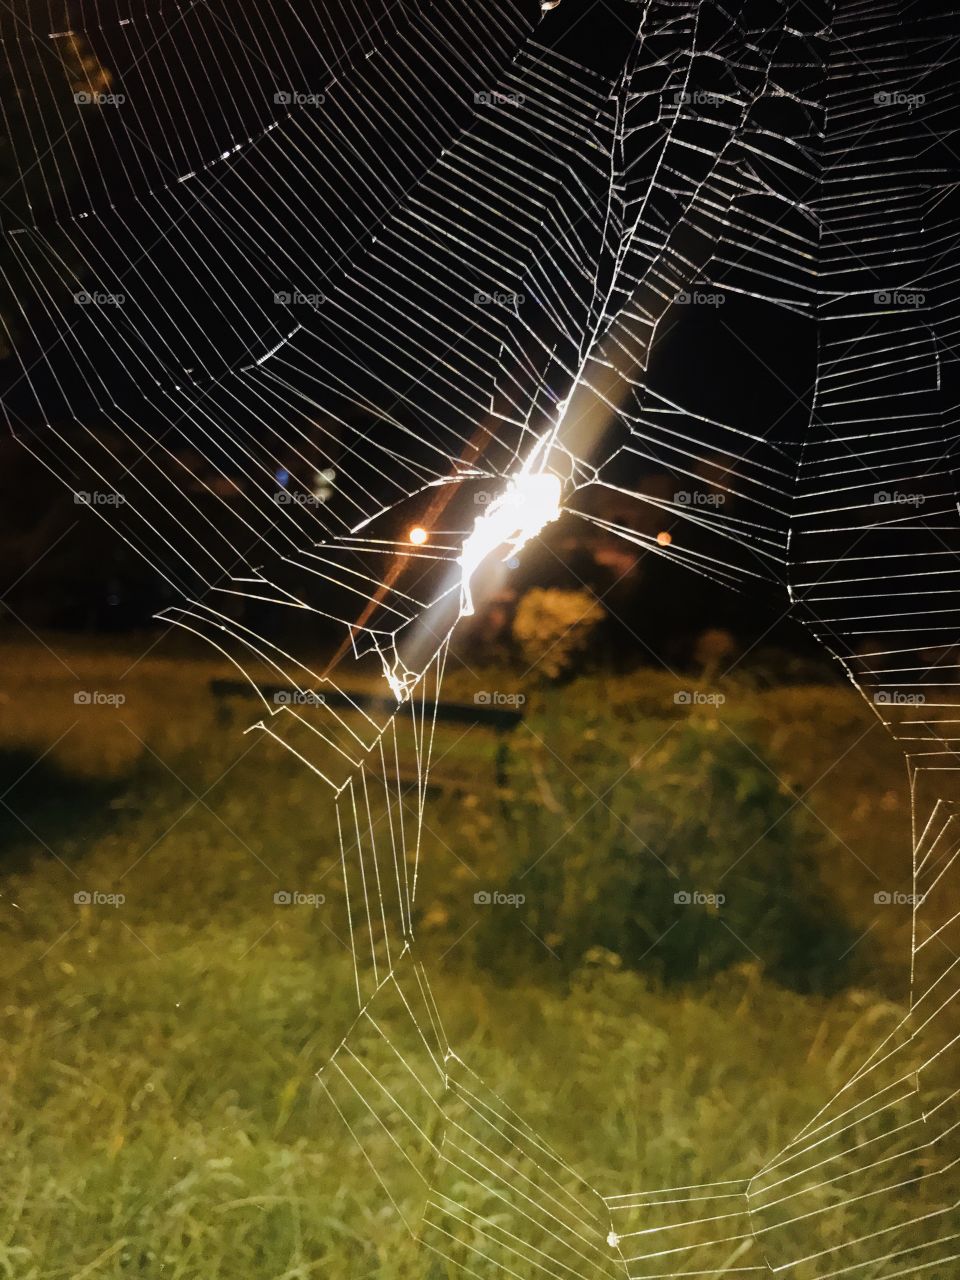 Wild Spider web...hunter....lethal trap